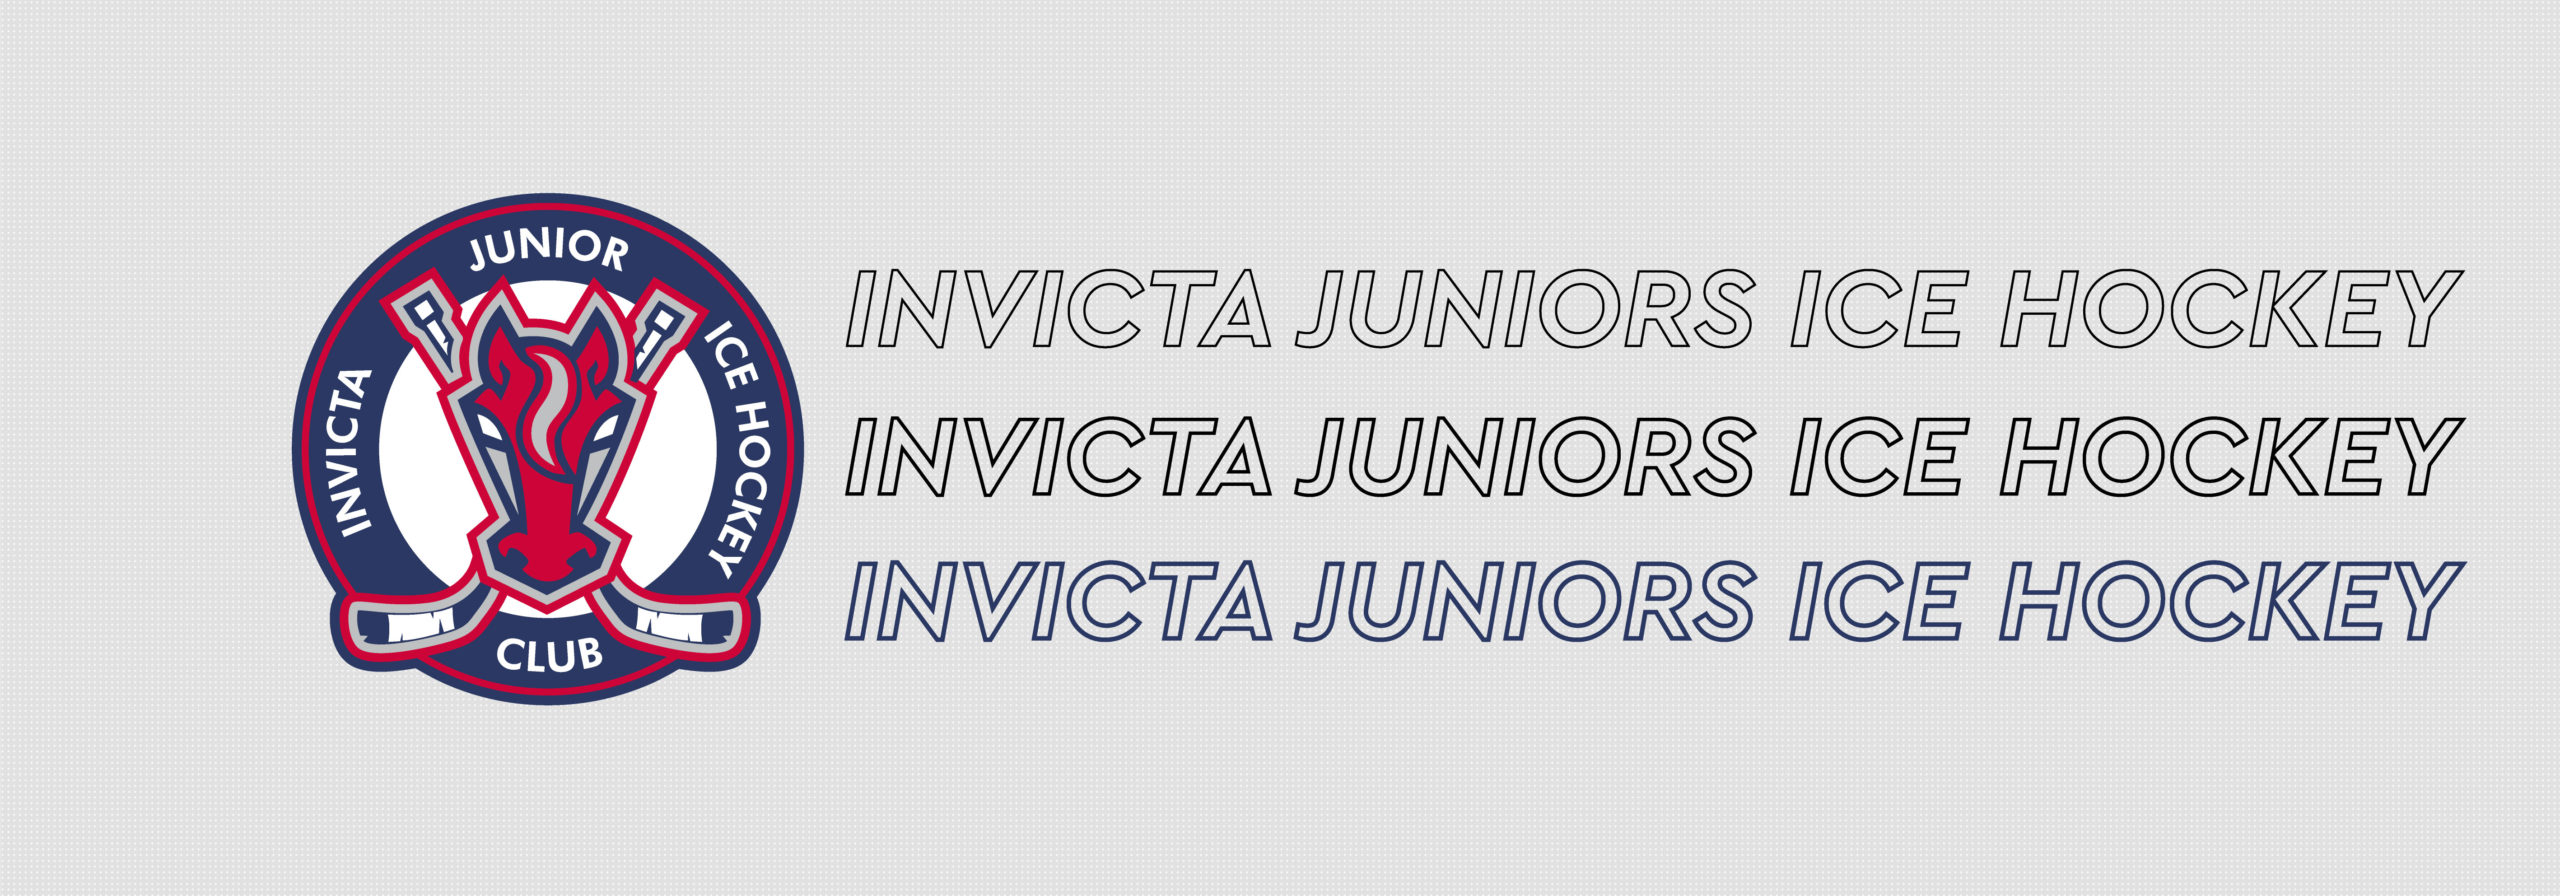 Invicta Juniors Ice Hockey Socks